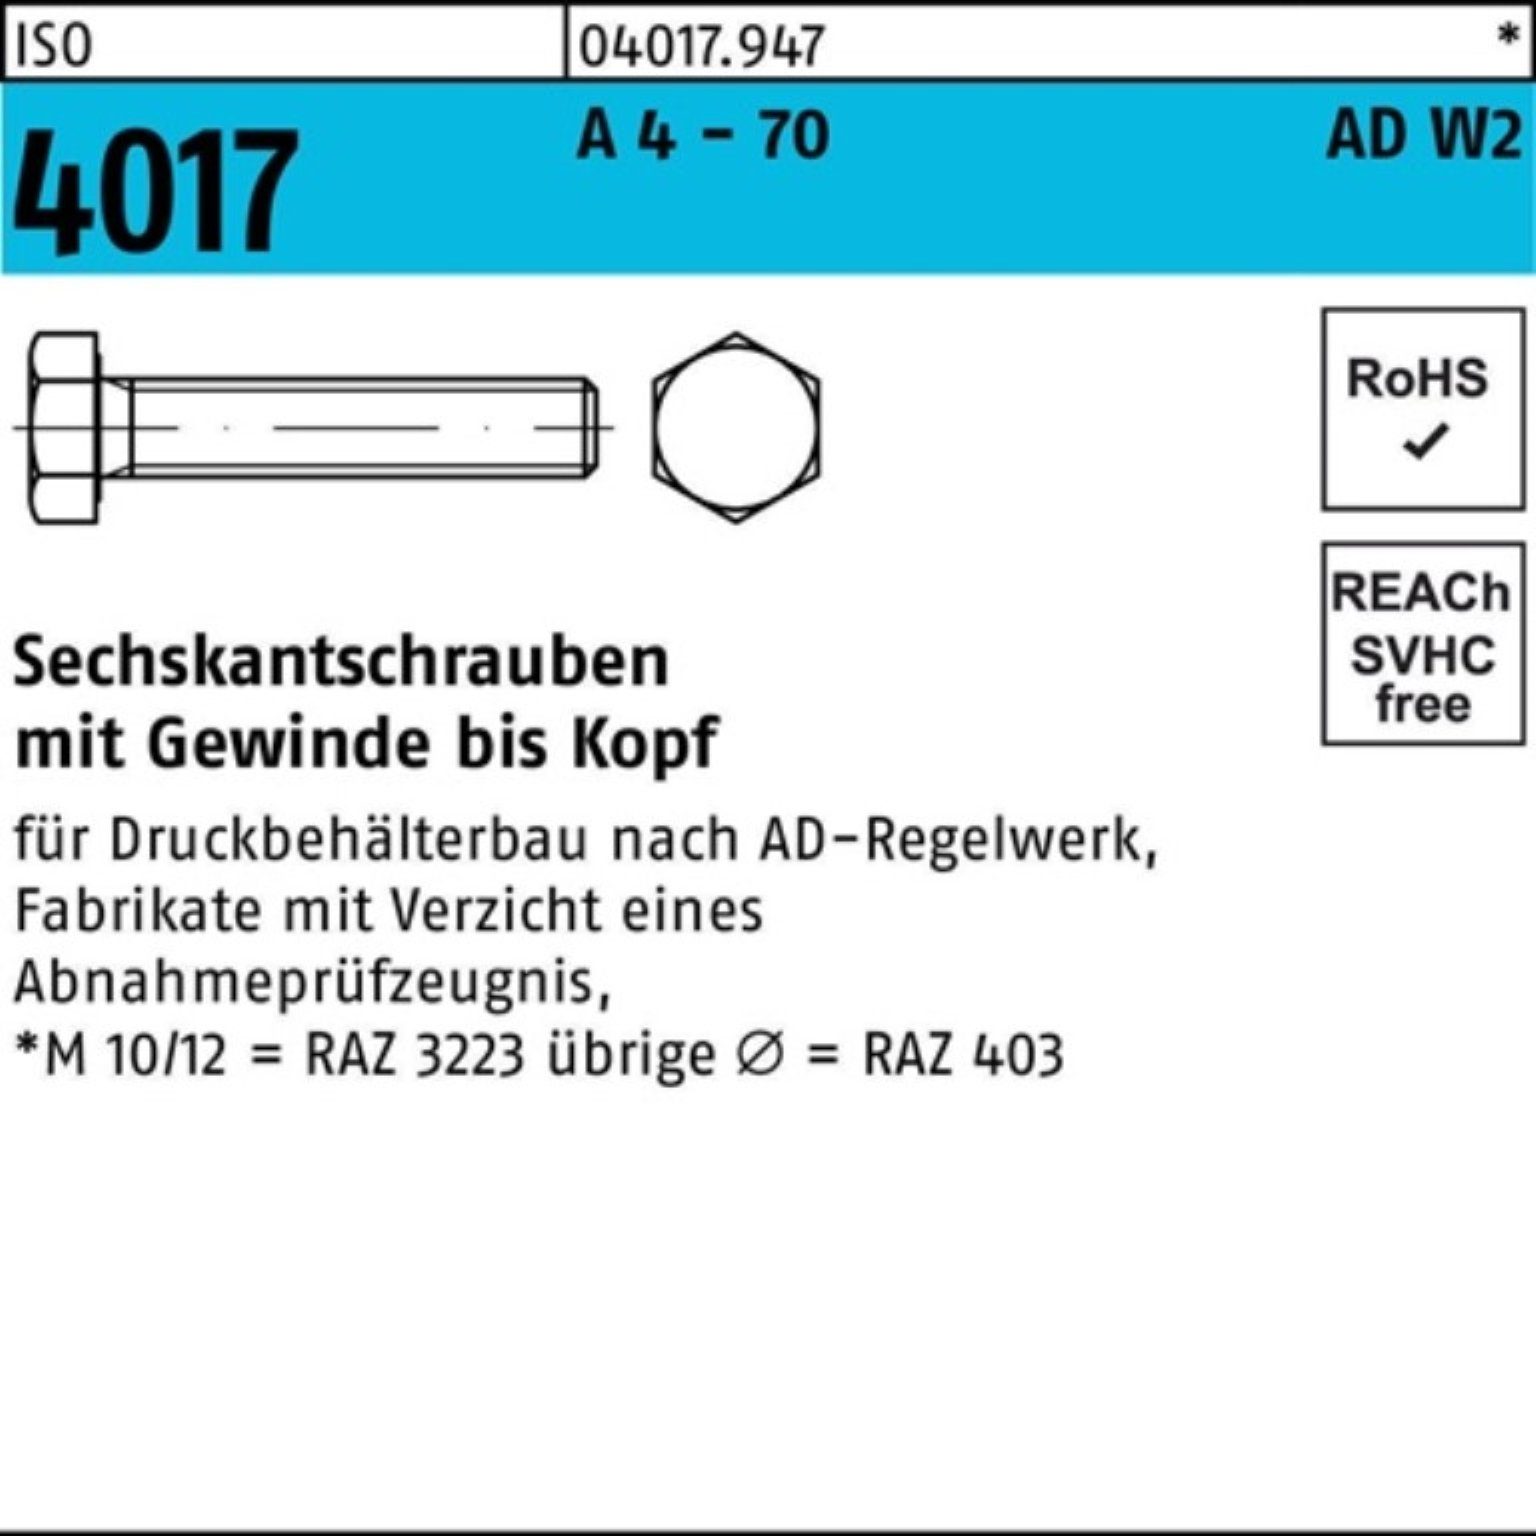 Bufab Sechskantschraube 100er Pack Sechskantschraube ISO 4017 VG M10x 35 A 4 - 70 AD-W2 100 St